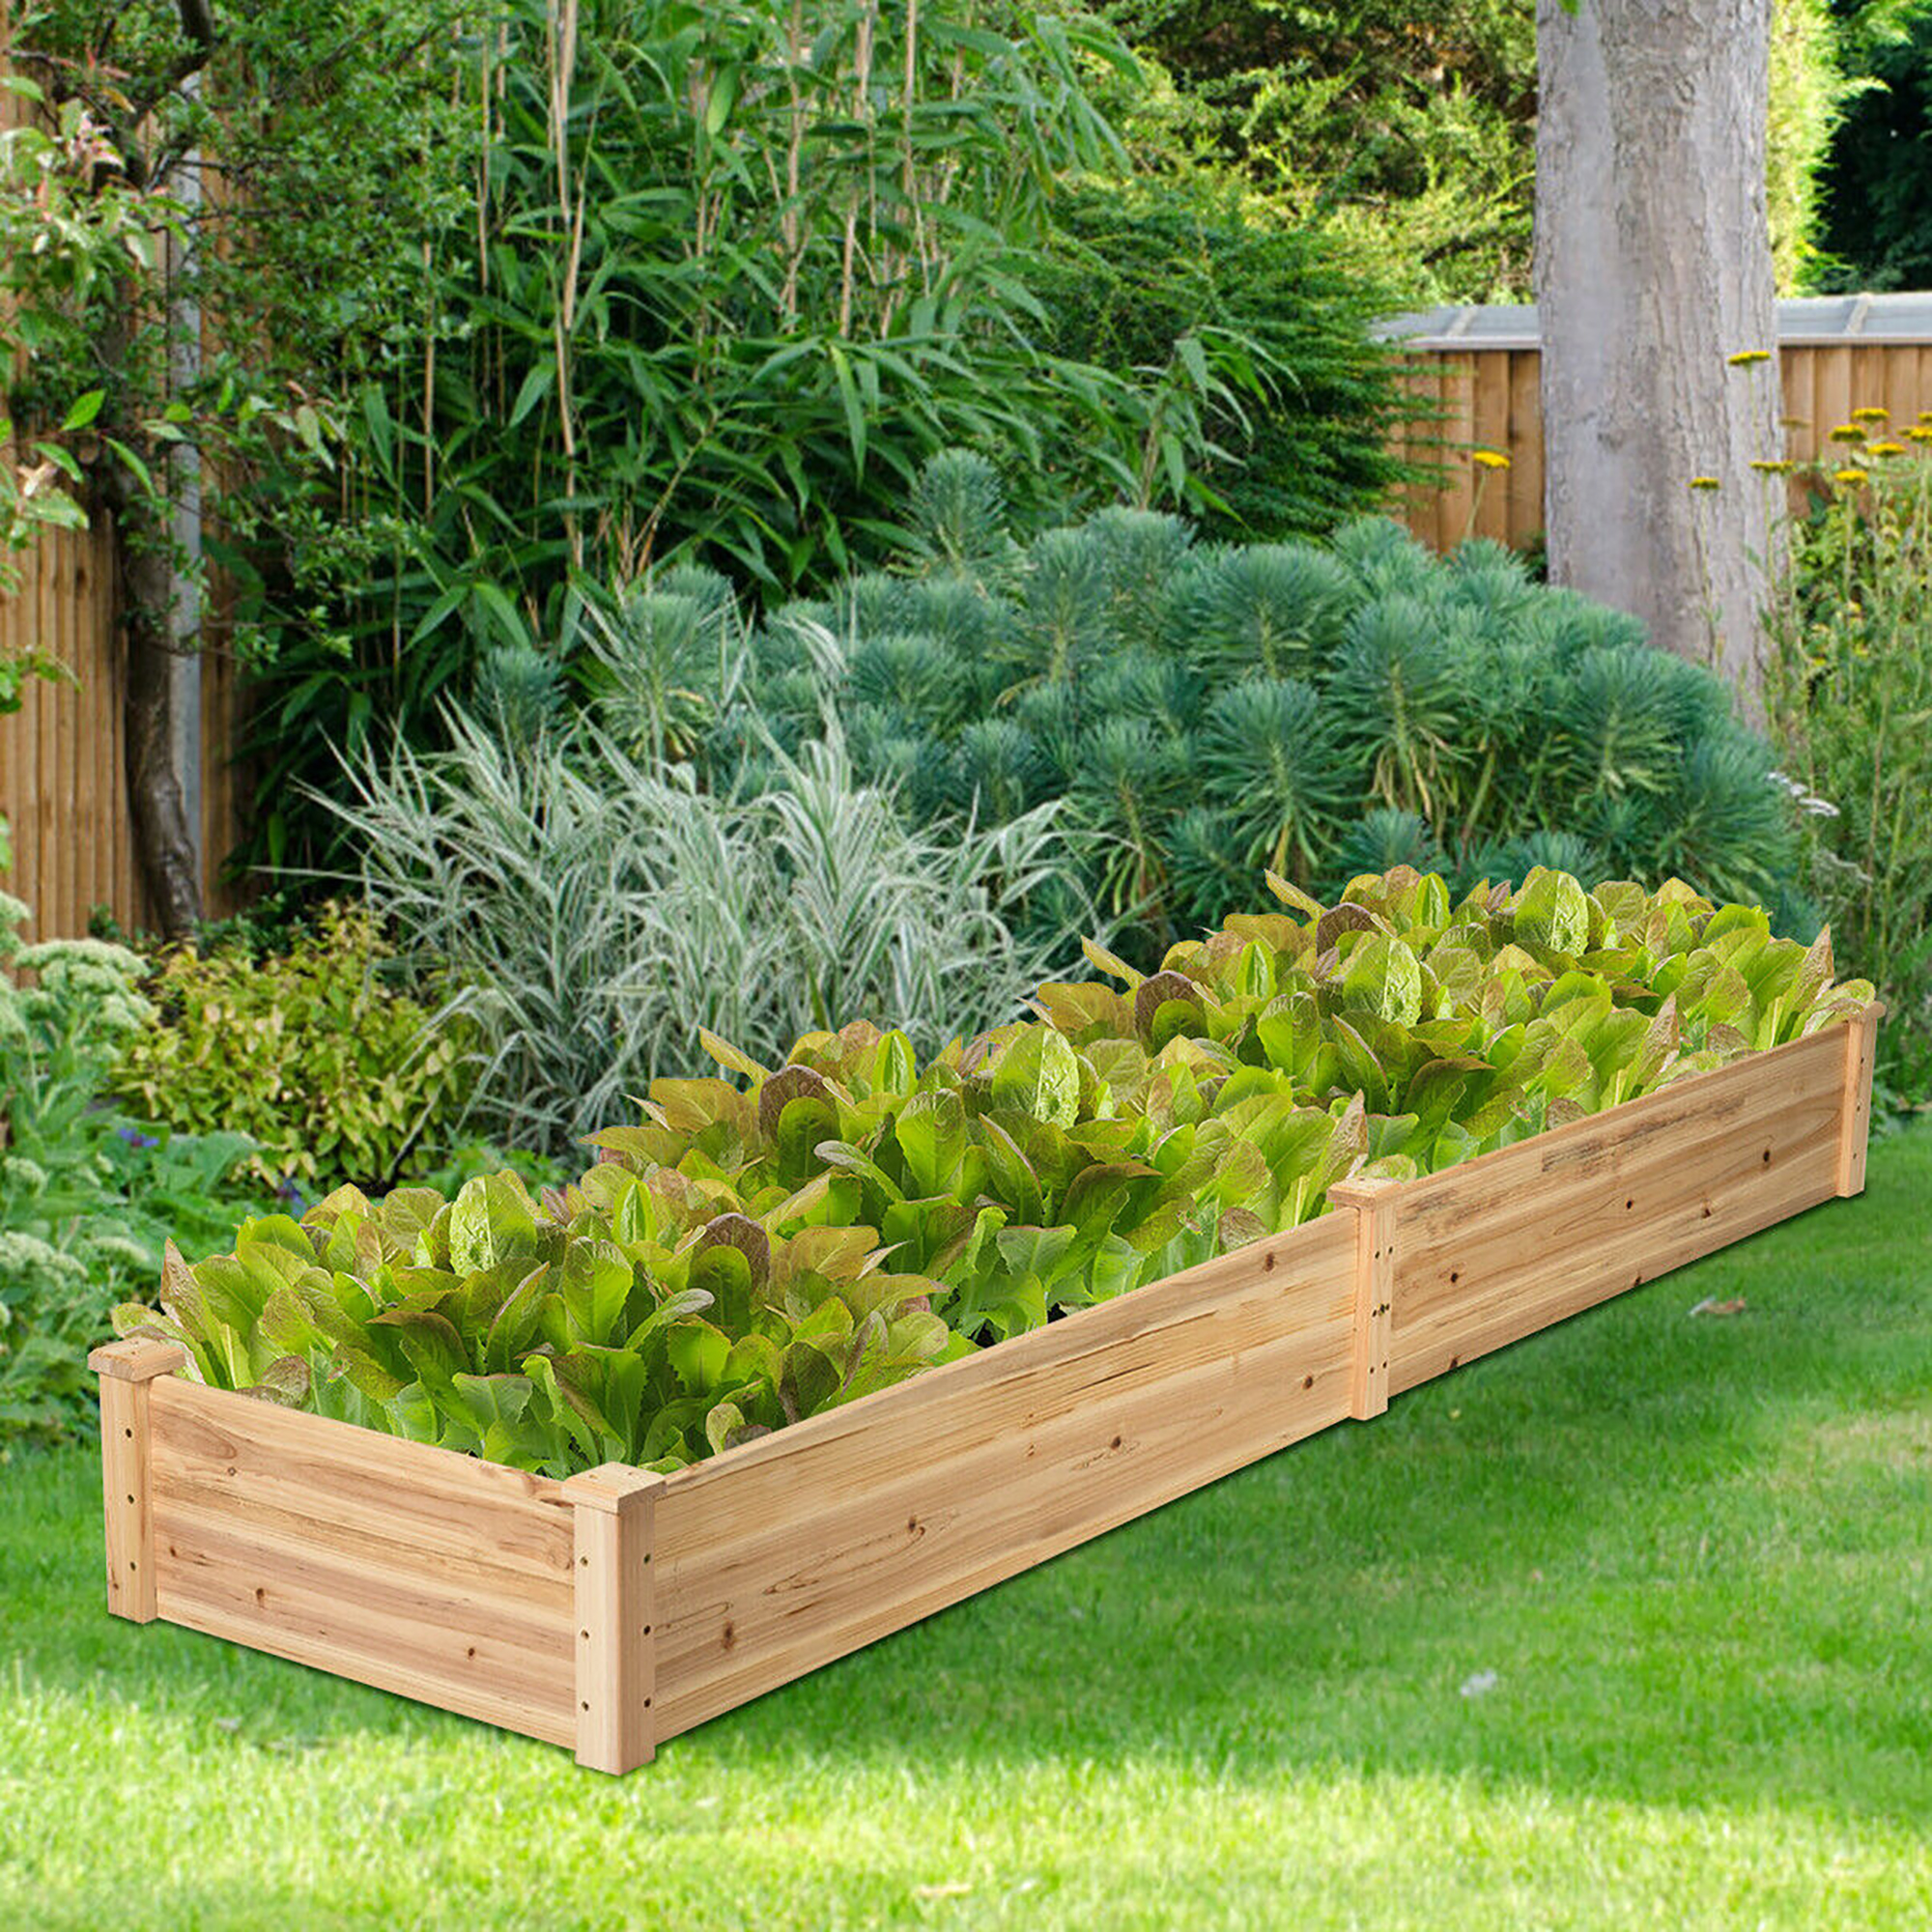 Costway Wooden Vegetable Raised Garden Bed Backyard Patio Grow Flowers Planter - image 2 of 8